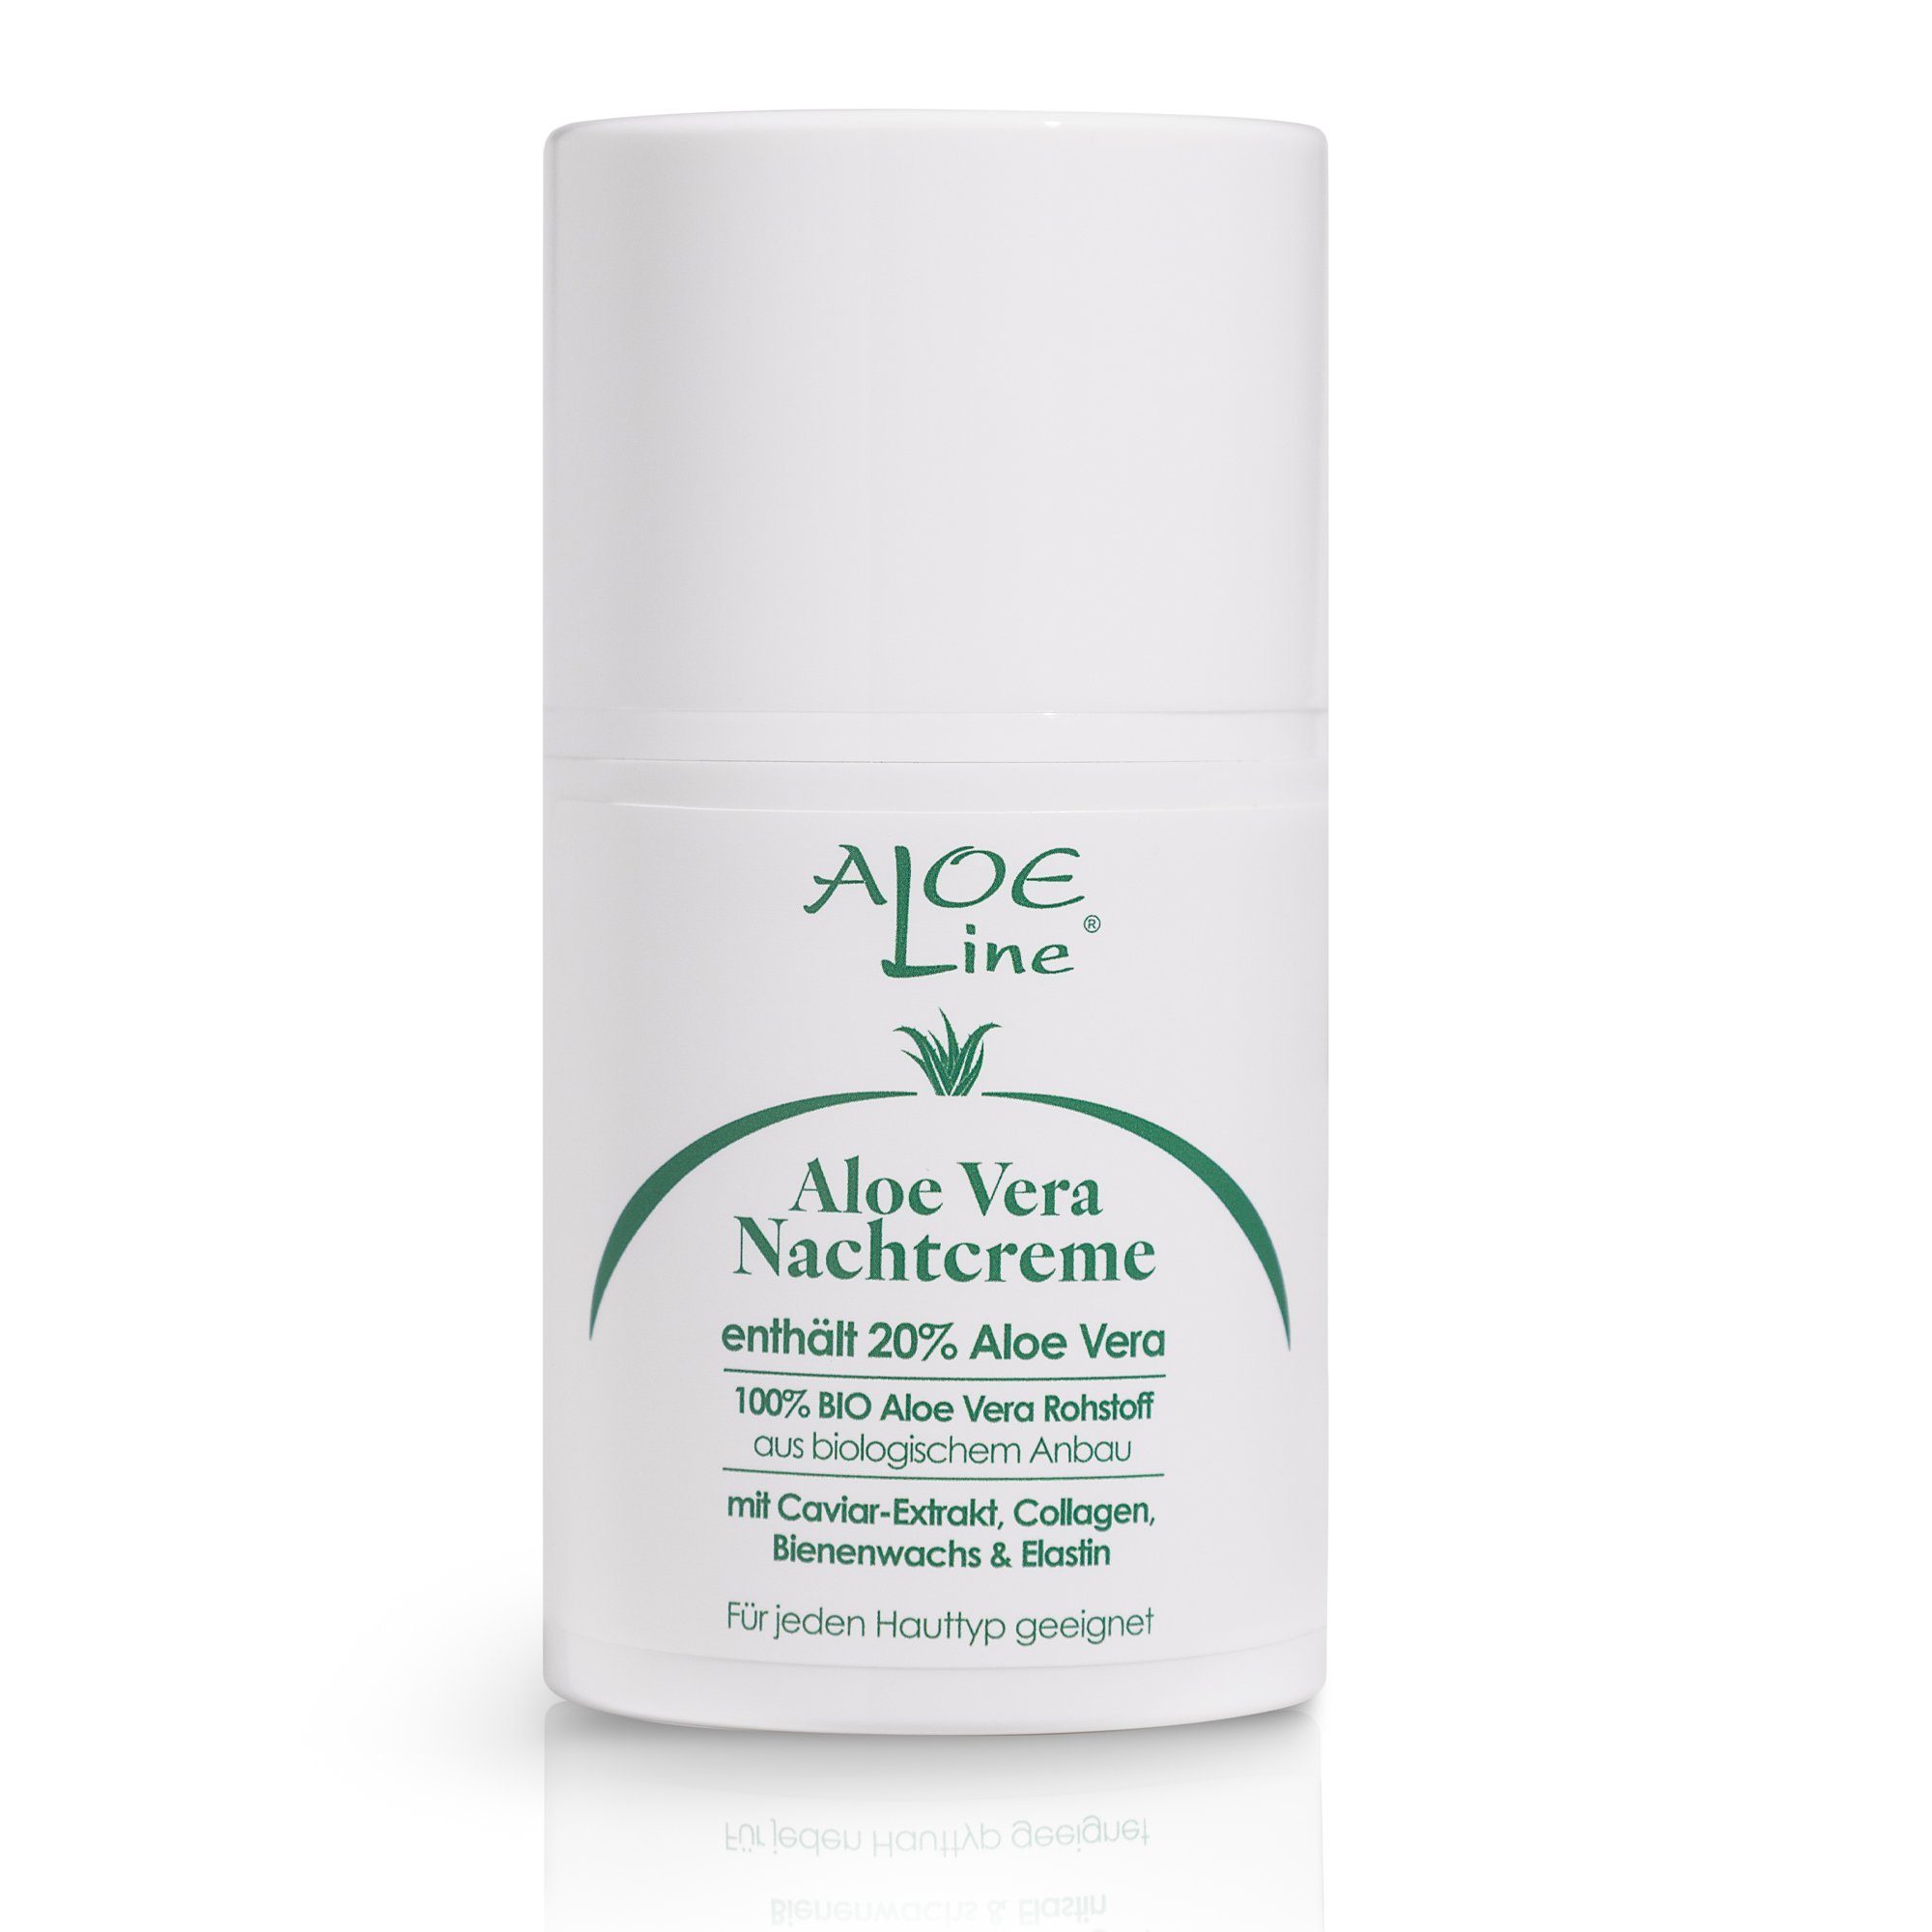 ALOE Line Nachtcreme Aloe Vera Nachtcreme mit 20% Bio Aloe Vera & Caviar-Extrakt, 50ml Airless Dispenser